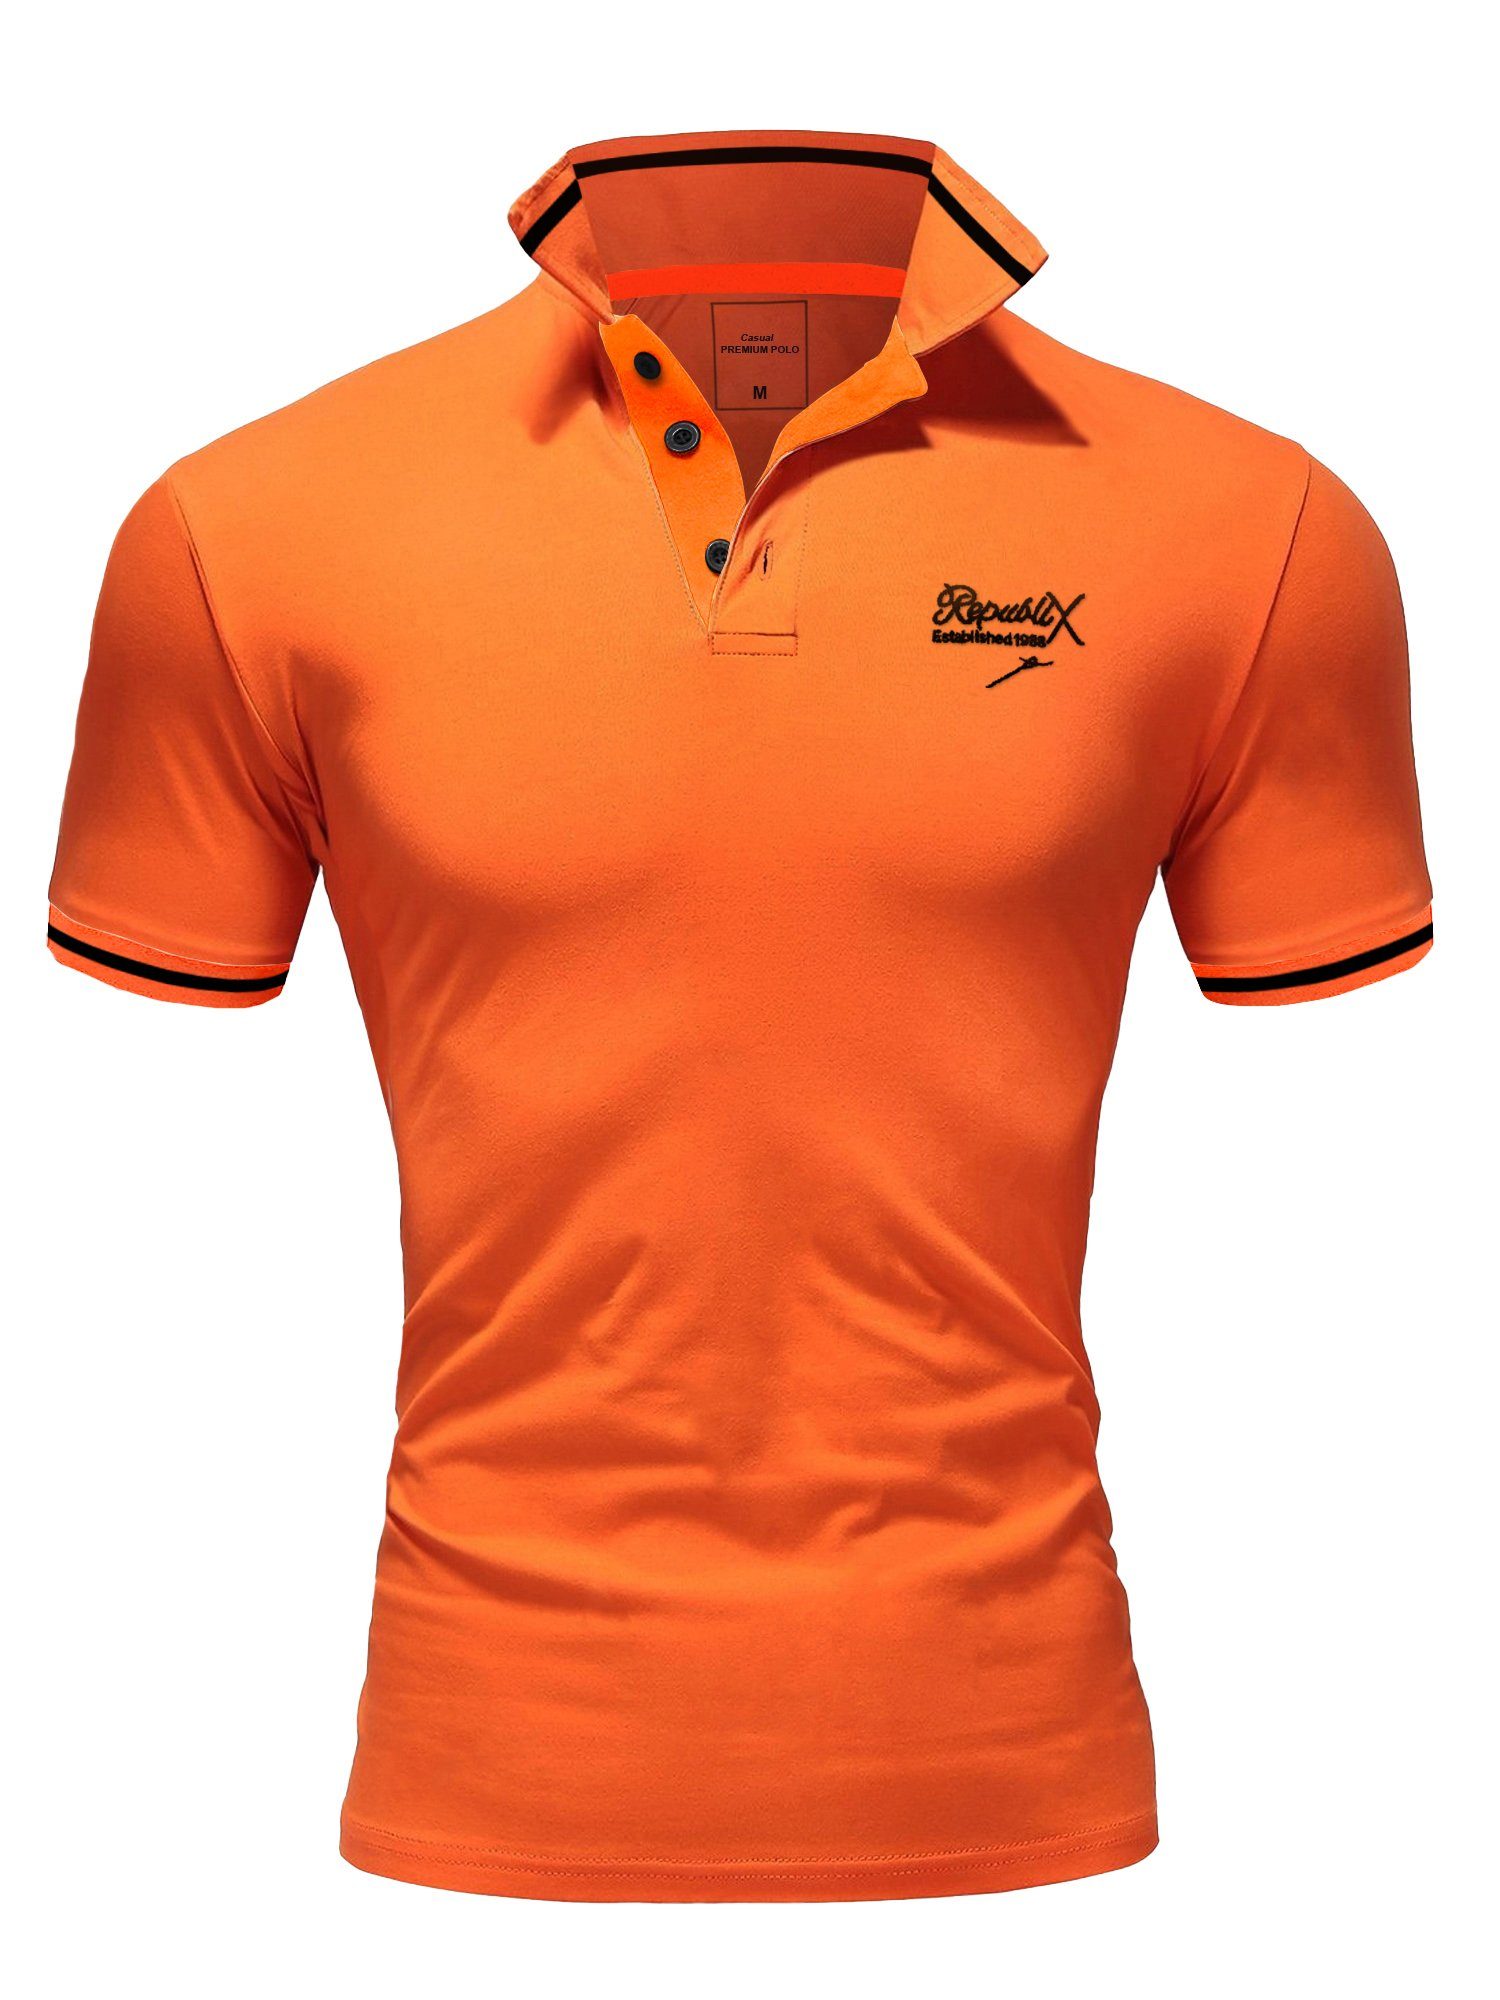 REPUBLIX Poloshirt GABRIEL Herren Basic Orange/Schwarz Kontrast Polo Hemd Kurzarm